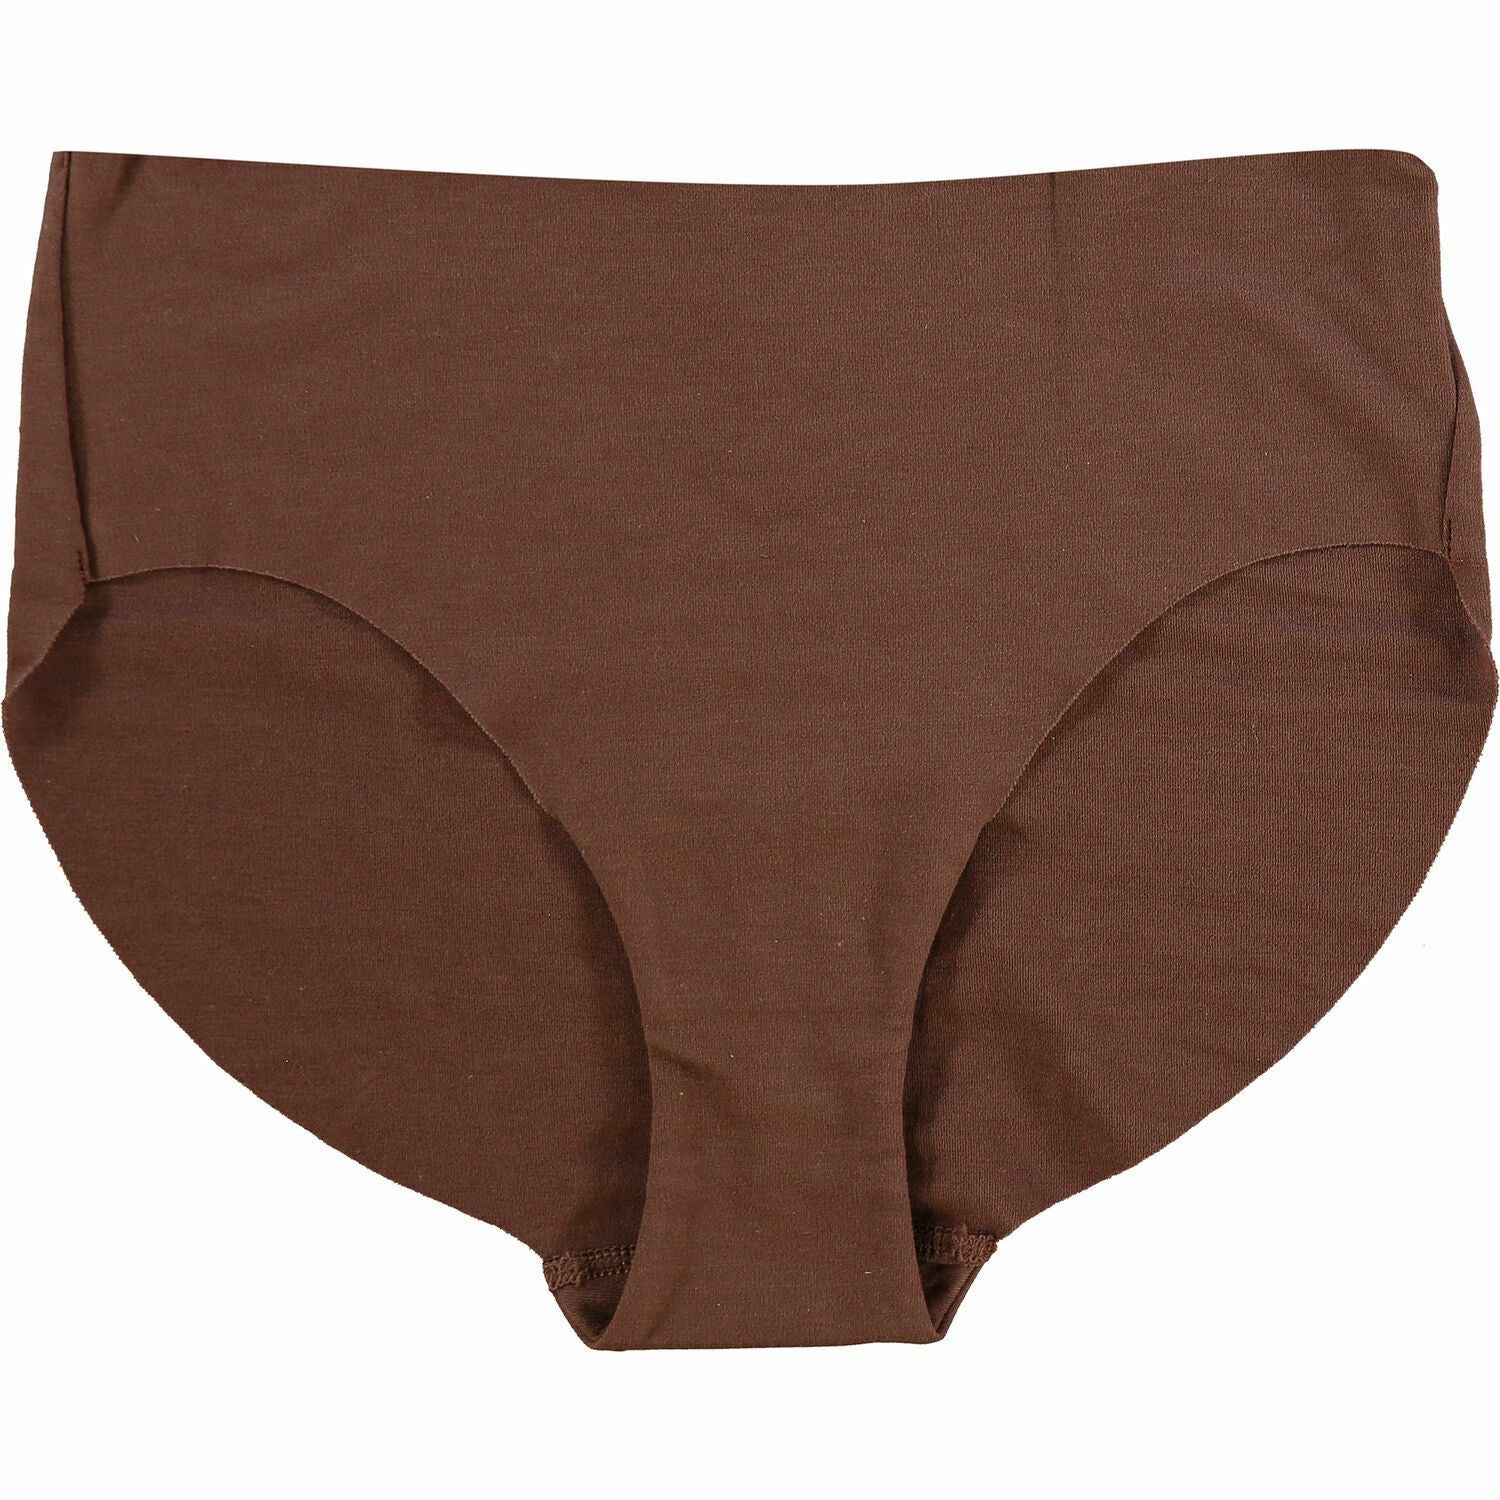 HANRO Women's Underwear - Invisible Cotton Briefs, Mocha, size S /UK 10 to UK 12